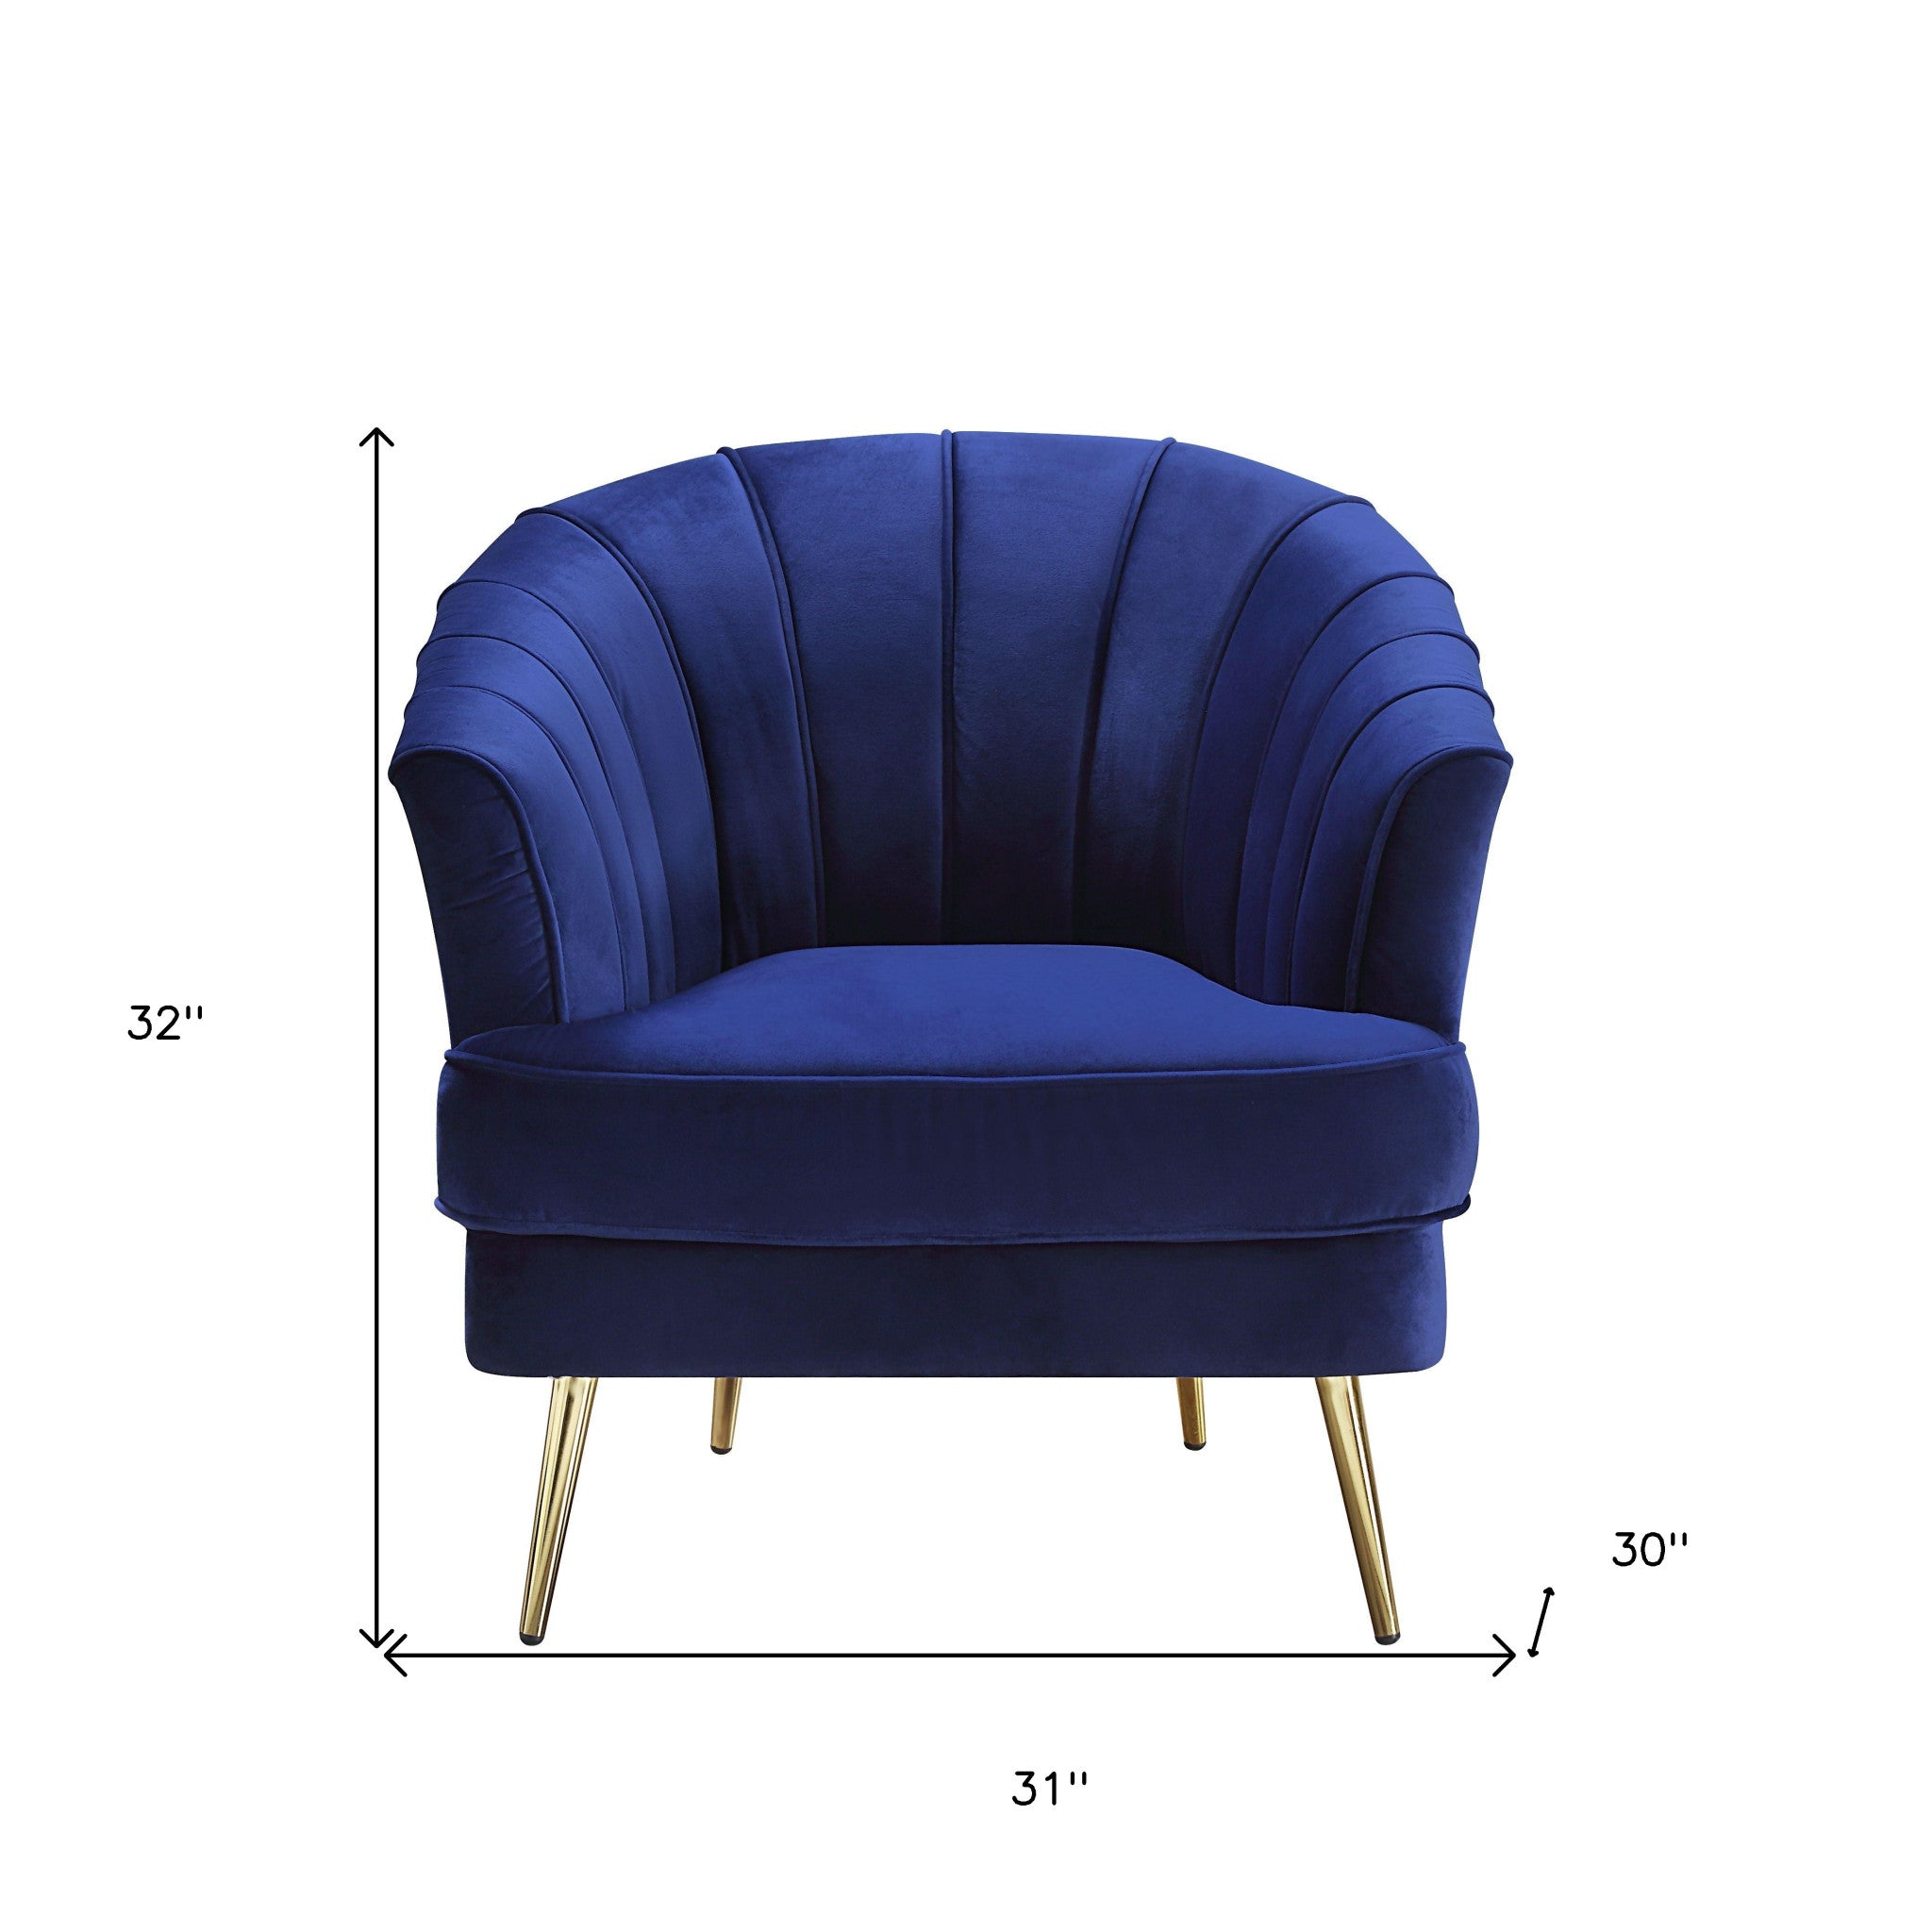 31" Blue Velvet And Gold Striped Barrel Chair